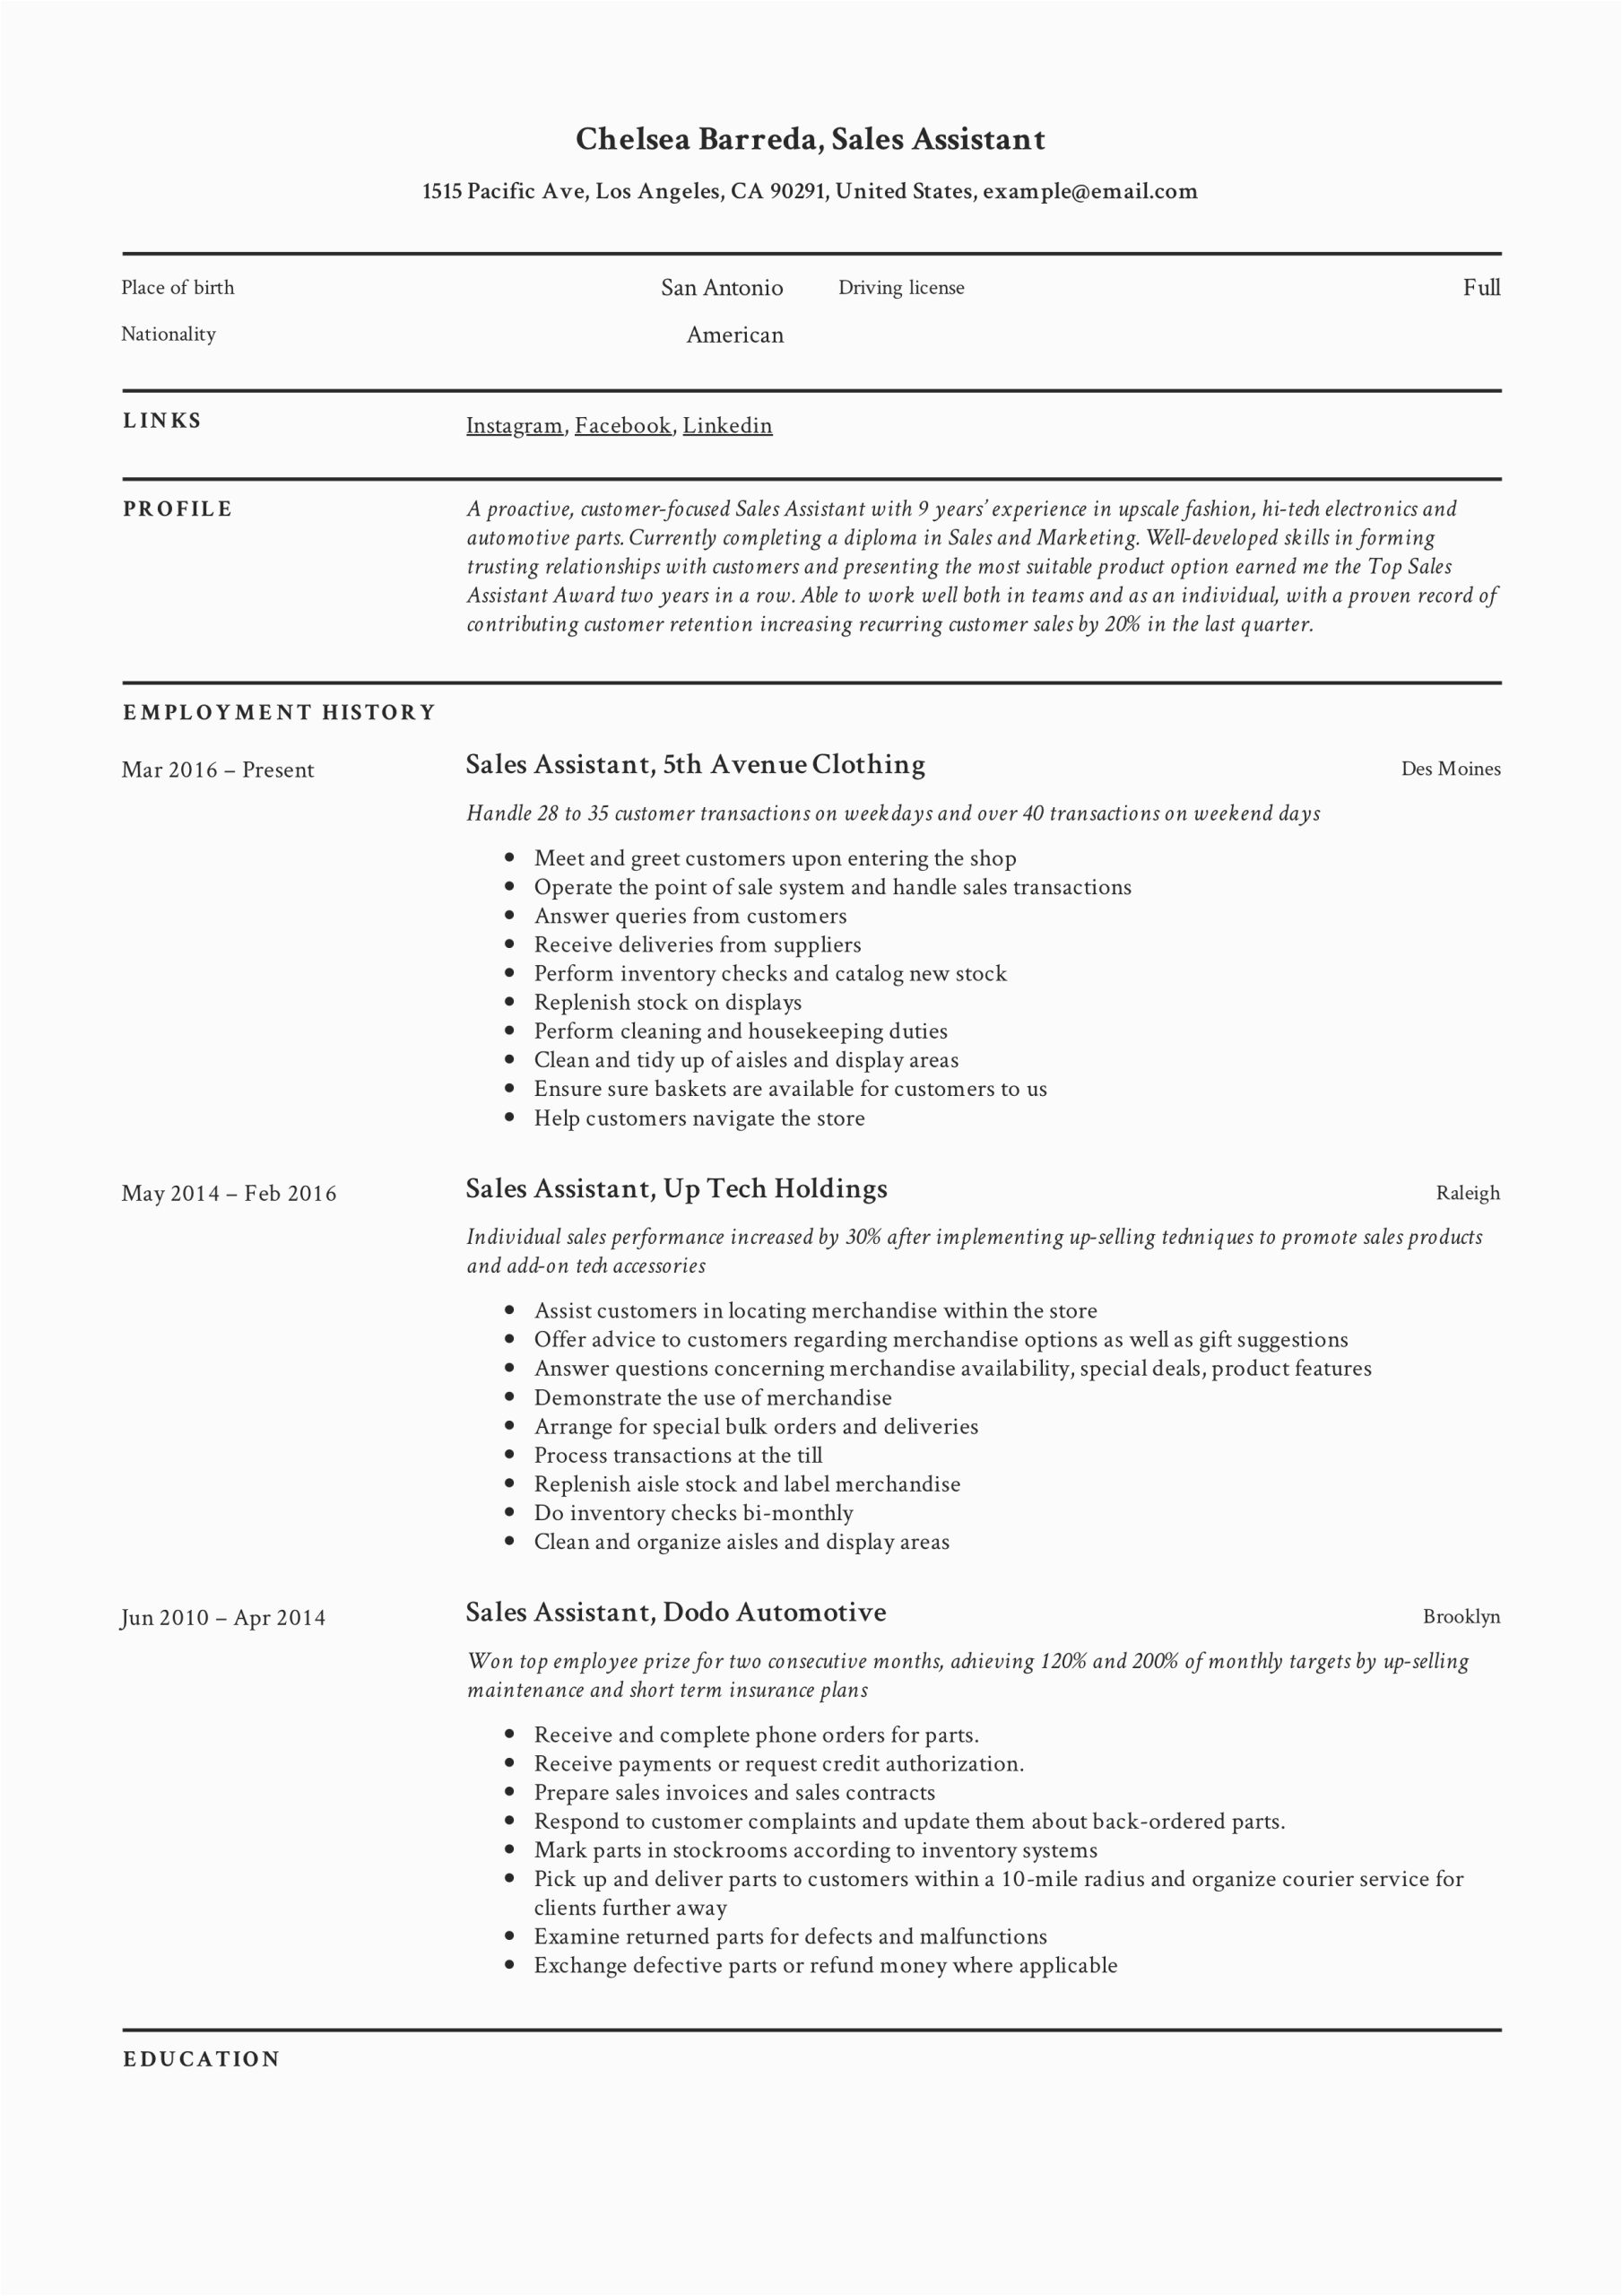 Sales assistant Job Description Resume Sample Sales assistant Resume & Writing Guide